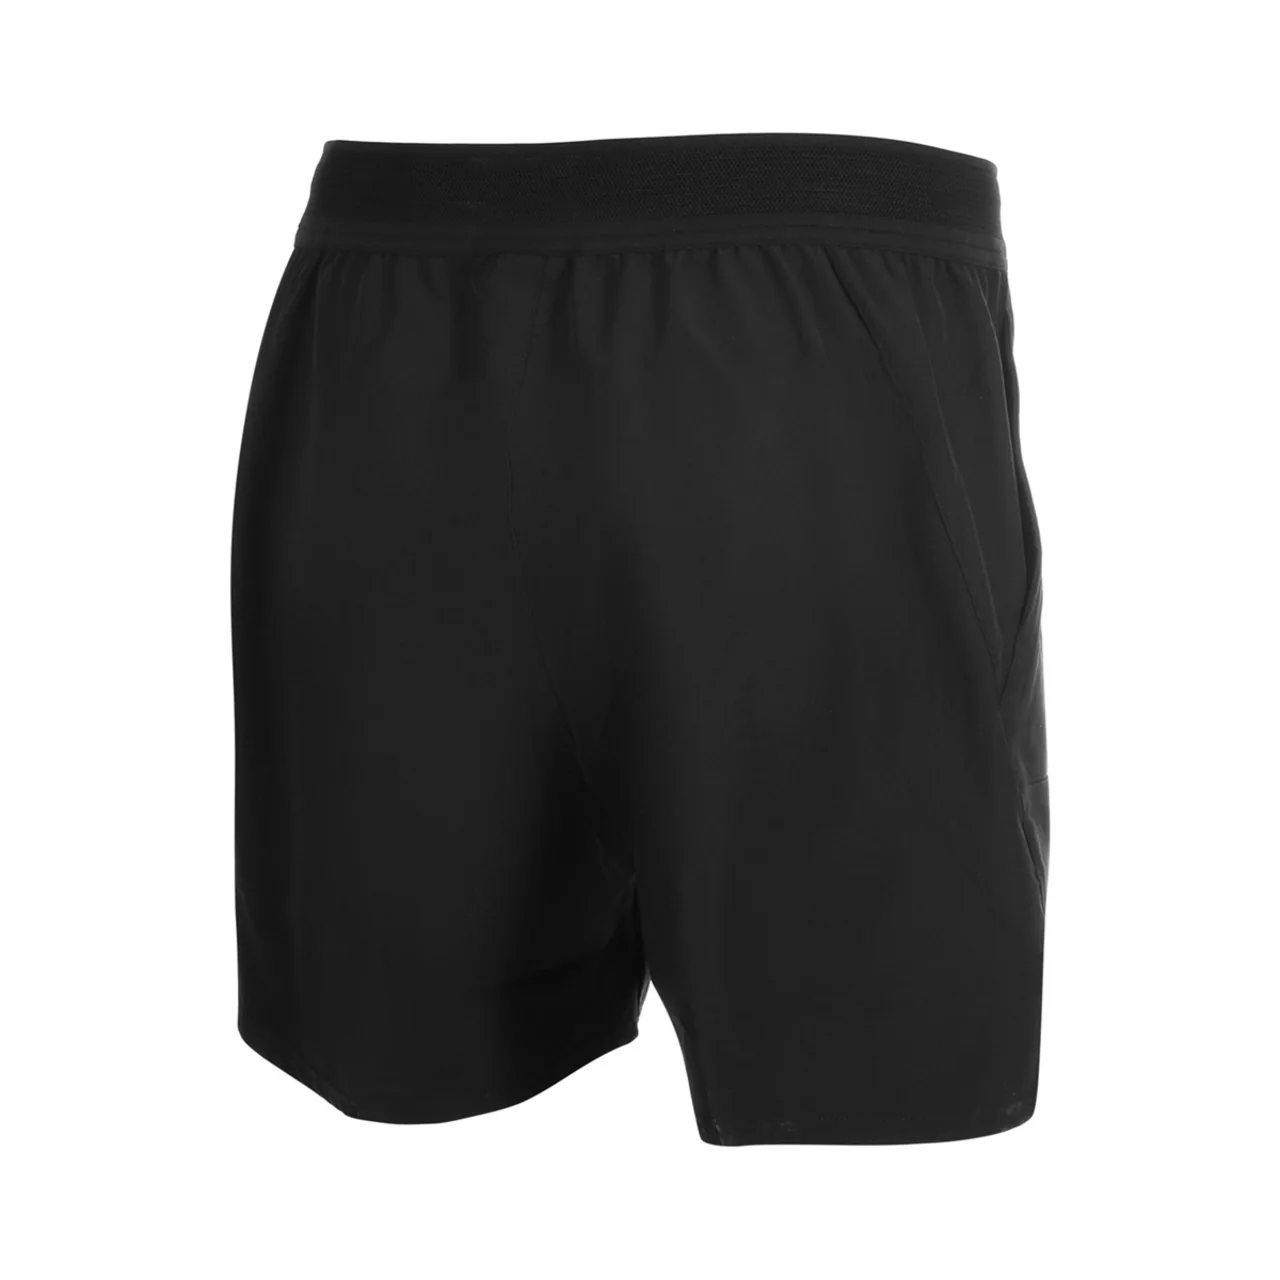 Nike Dri-FIT Advantage 7'' Shorts Black/White Size S